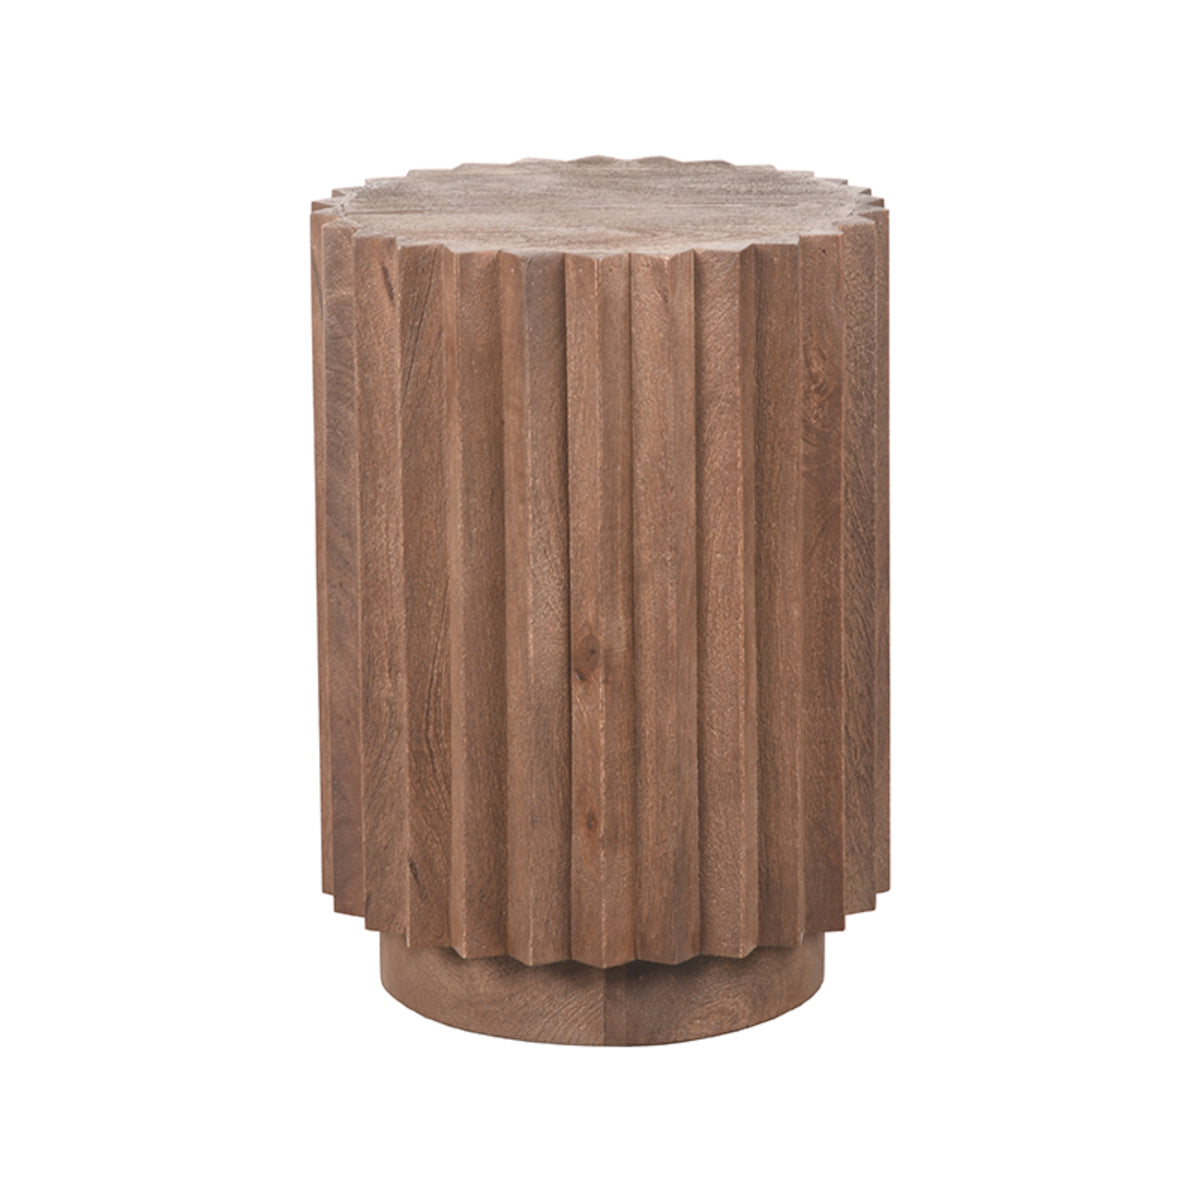 LABEL51 Novan side table - Espresso - Mango wood